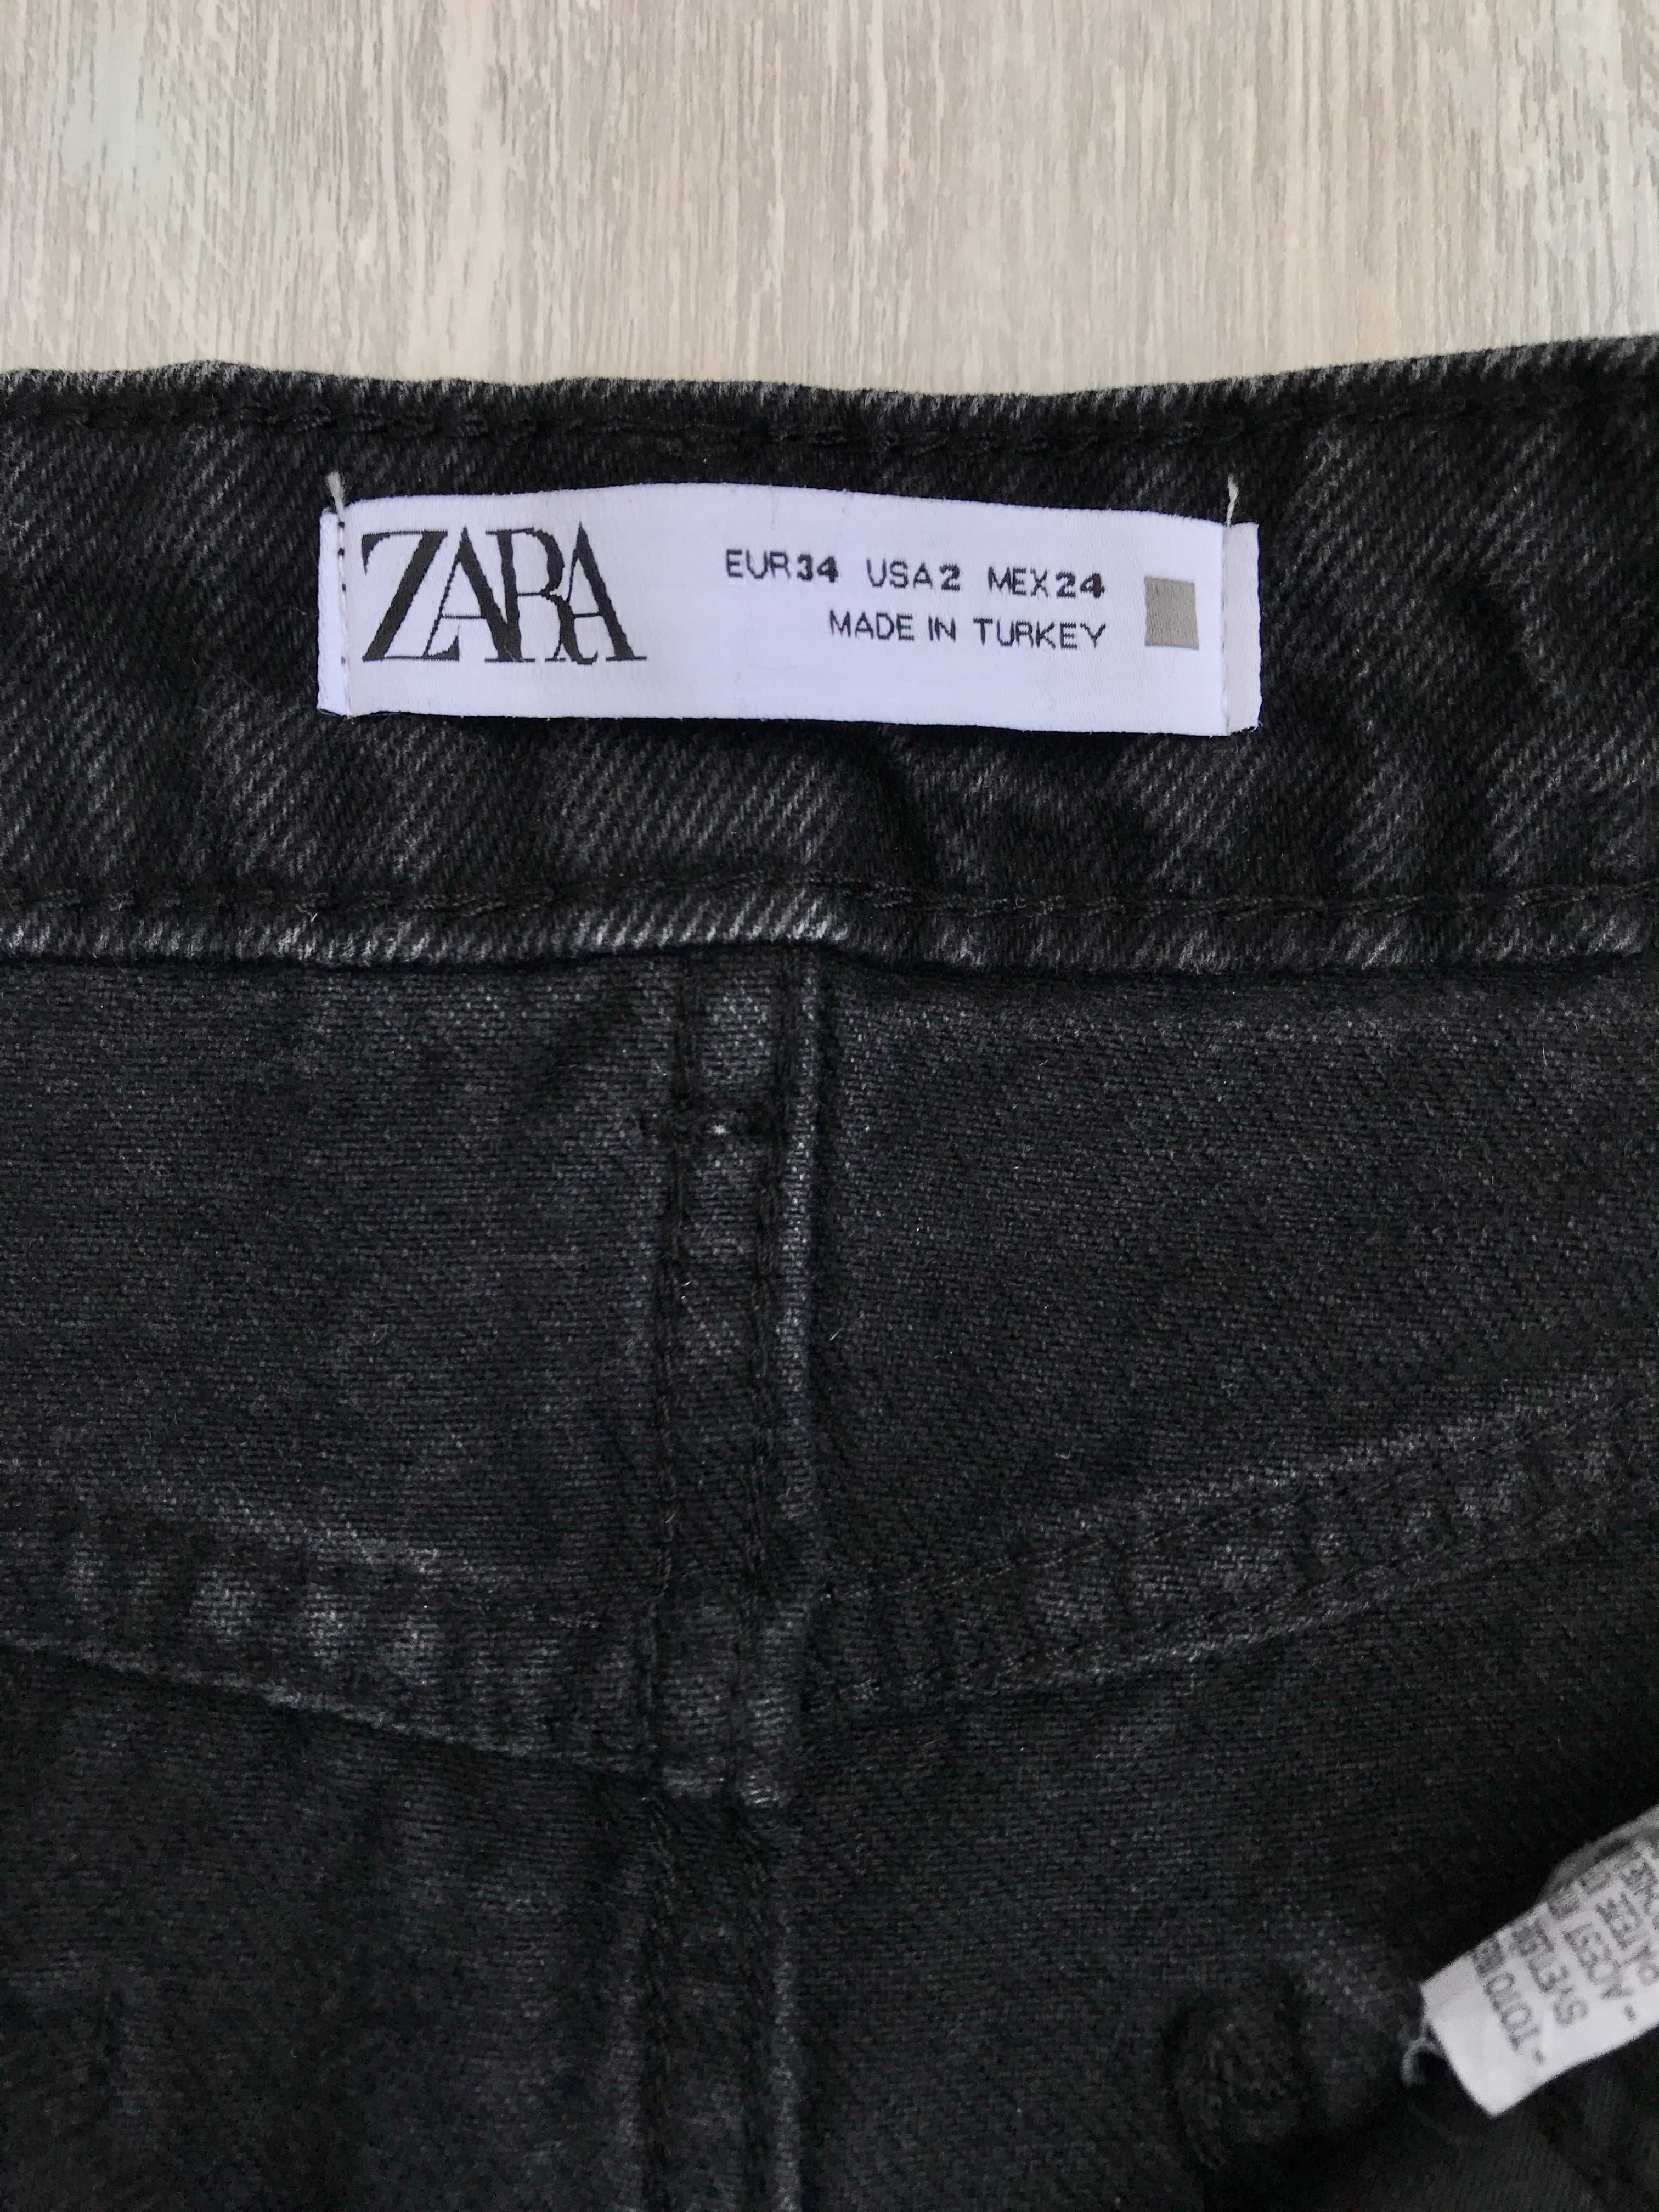 Шорты Zara EUR34 USA2 MEX24, черные